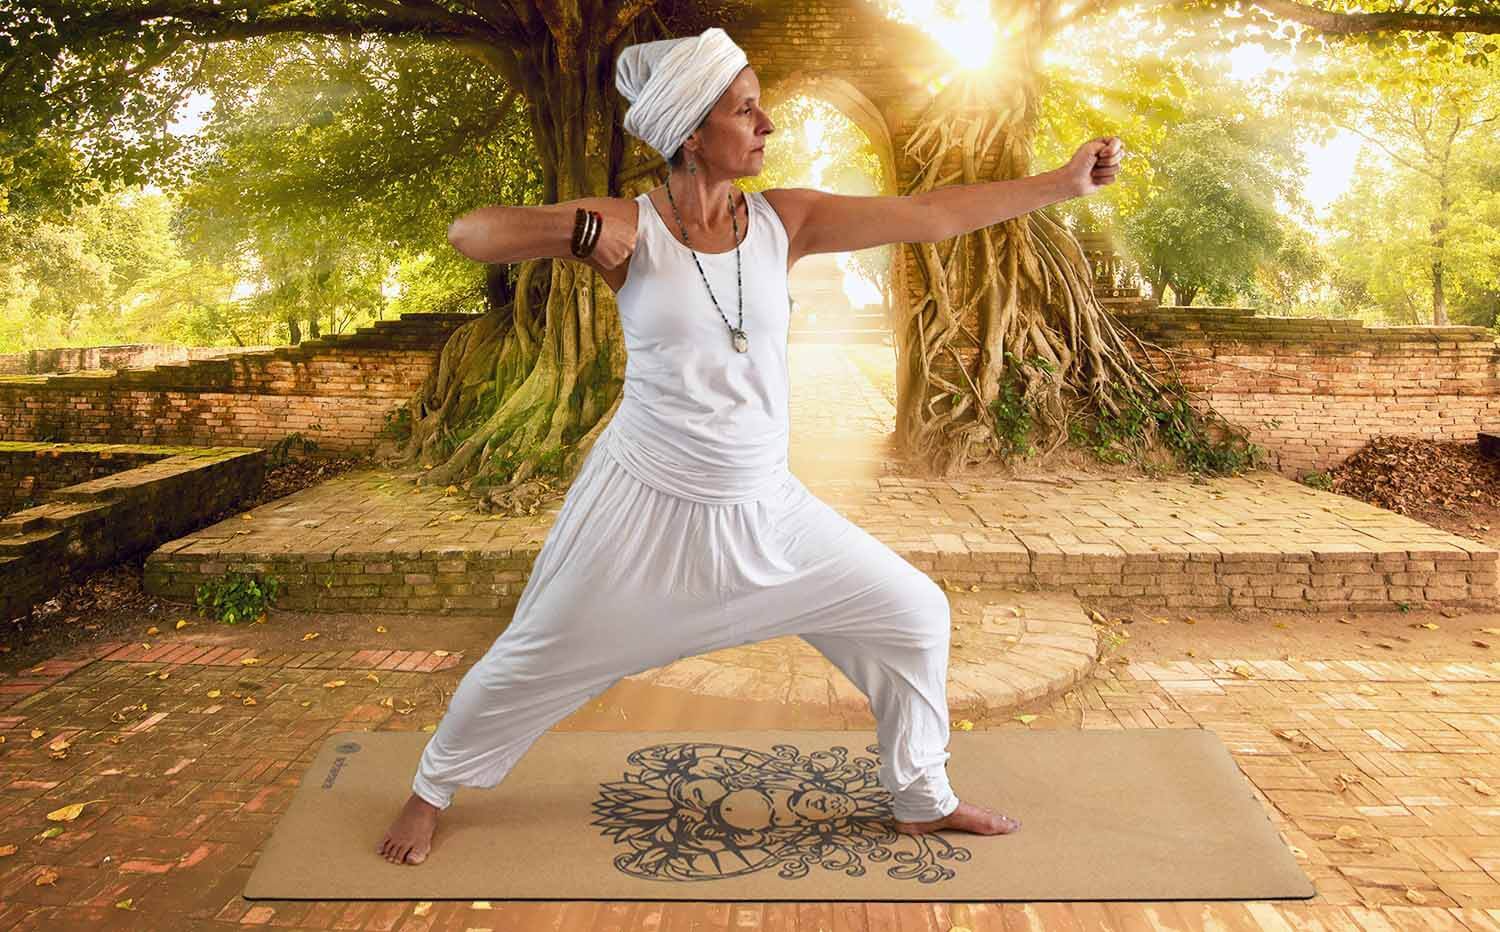 Magasin yoga Reins - Yogini pratiquant le kundalini yoga en vetement yoga blanc - Sarouel yga femme ettee shirt yoga femme blanc - Achamana